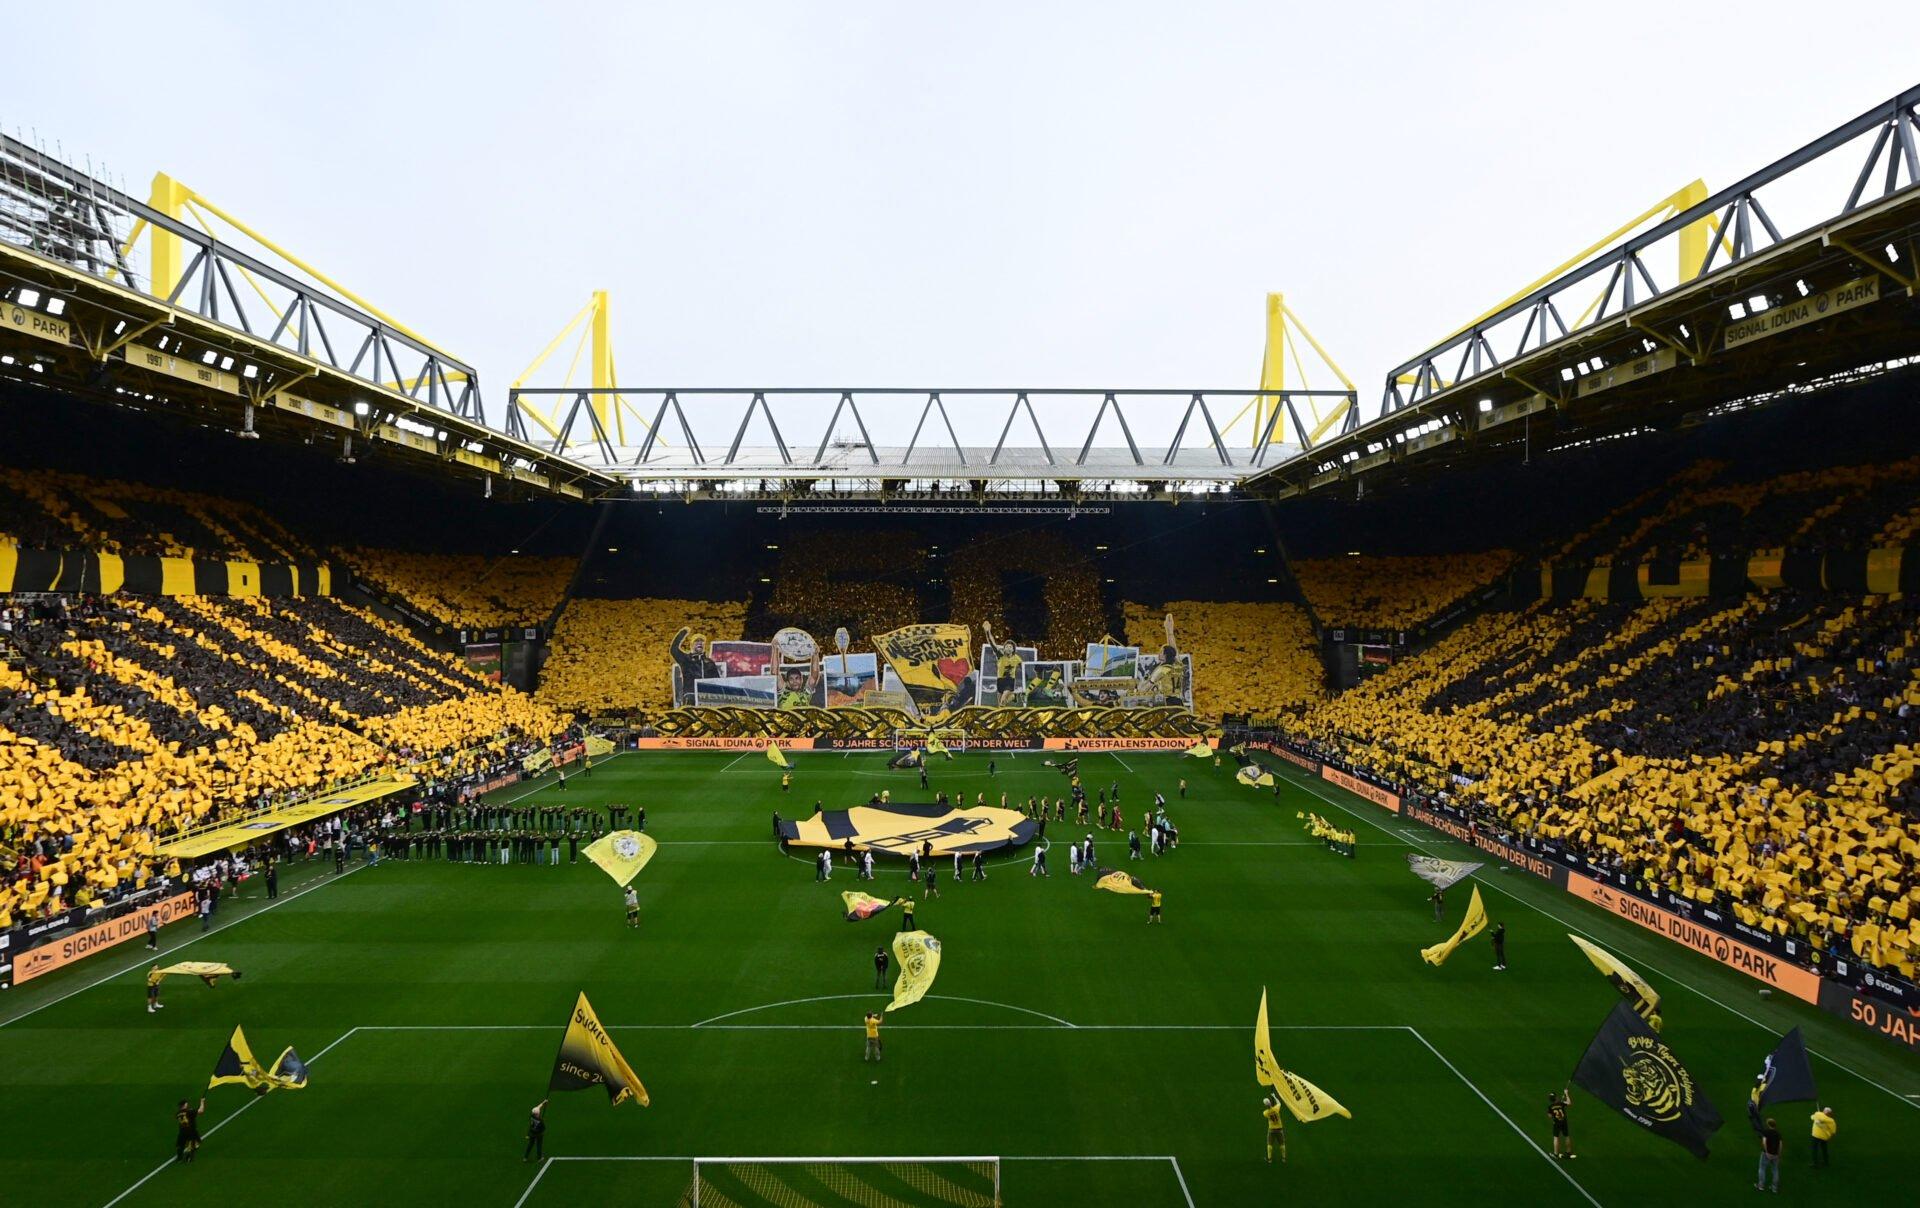 Borussia Dortmund - Signal Iduna Park